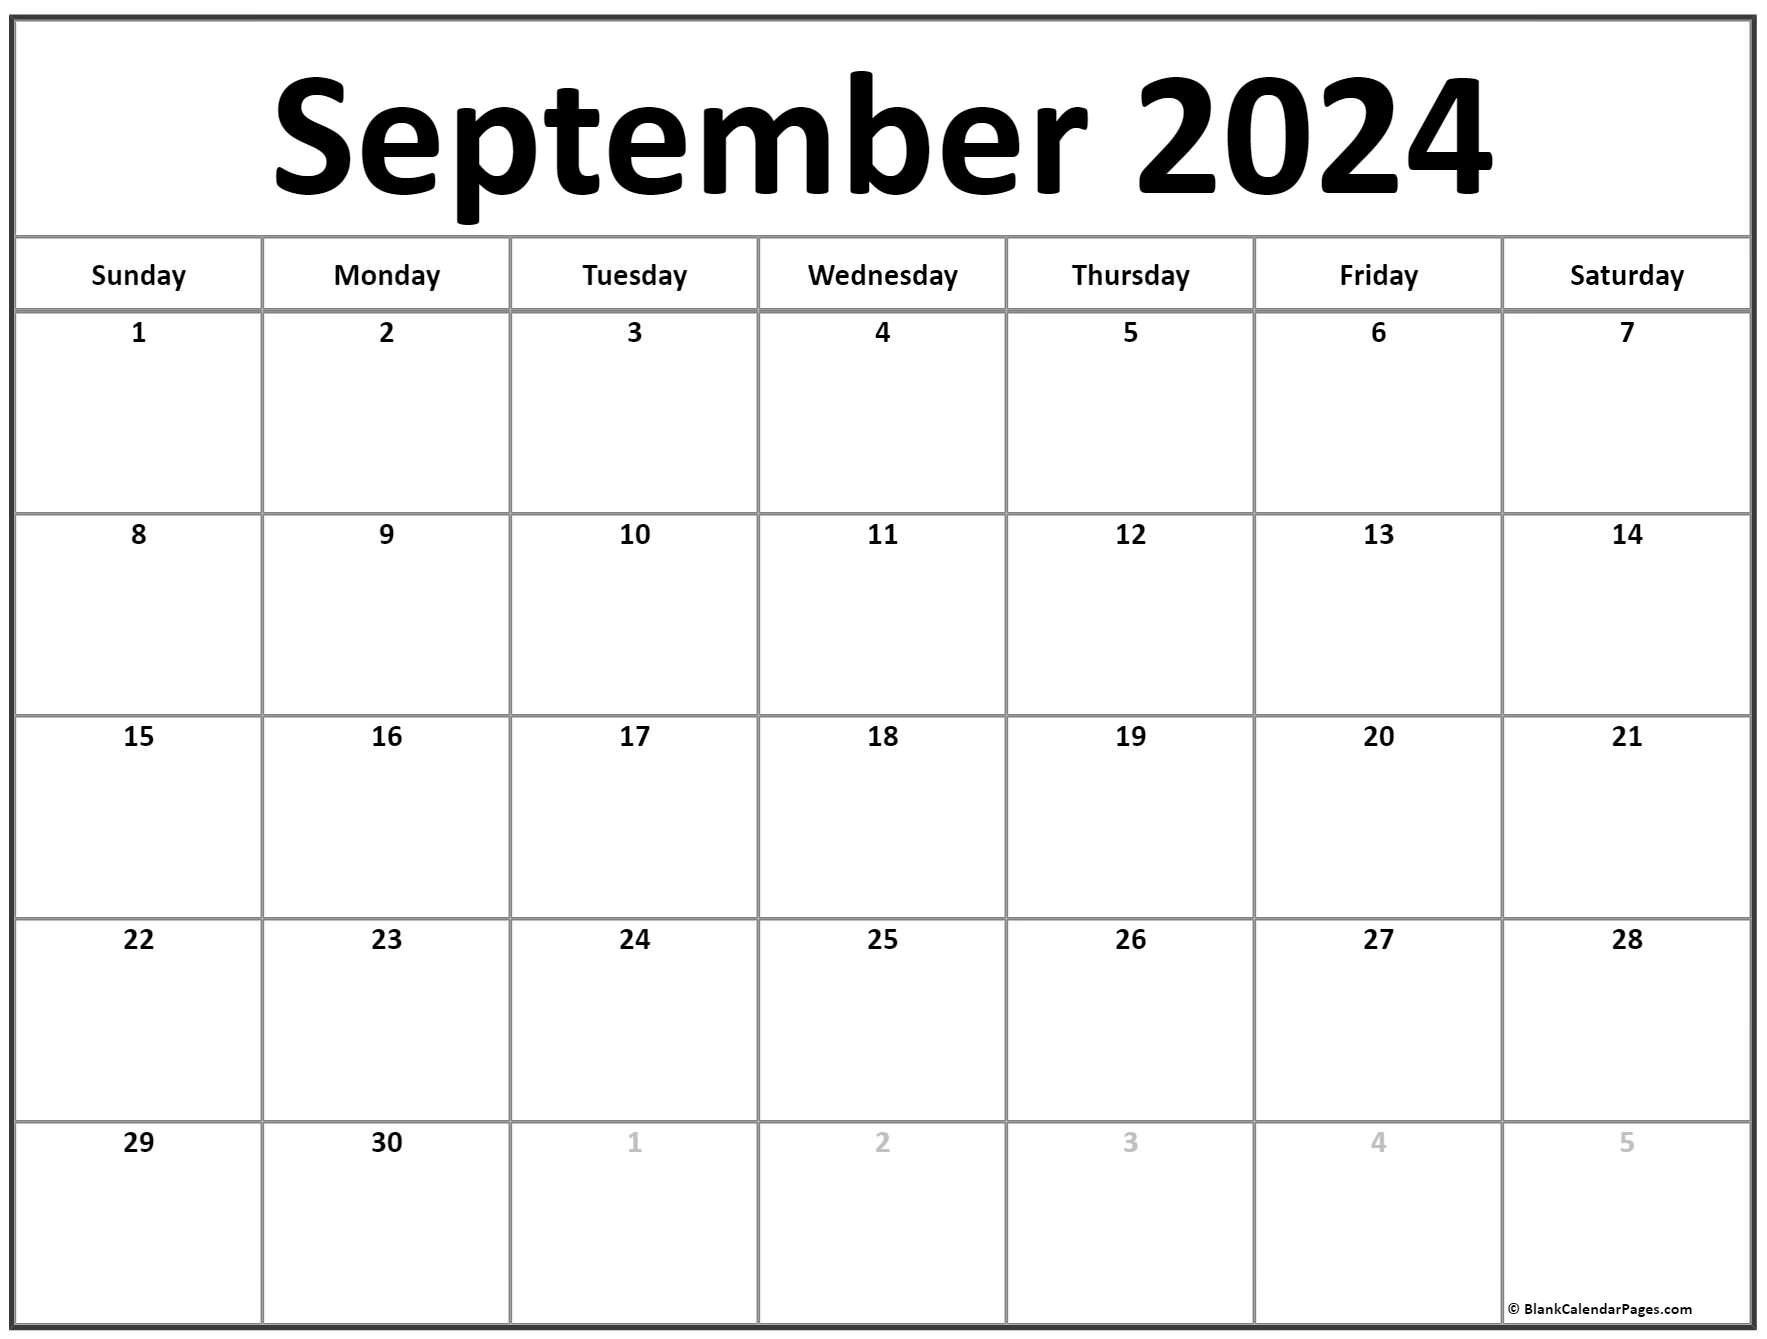 September 2022 Blank Calendar September 2022 Calendar | Free Printable Calendar Templates